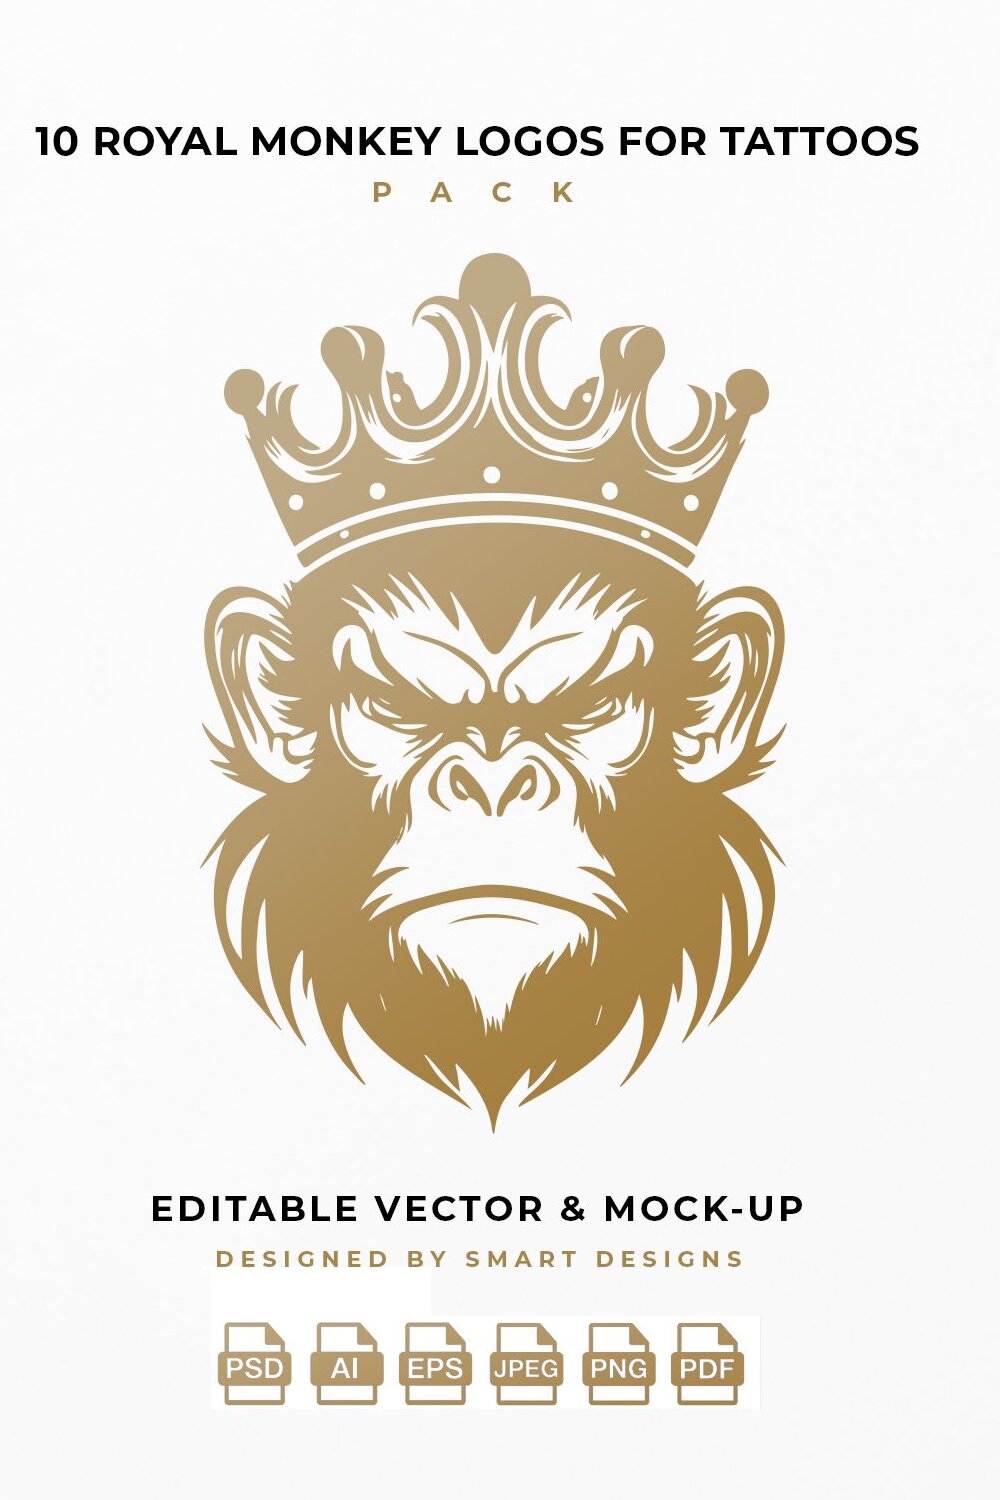 royal monkey logos for tattoos pack x10 2 847